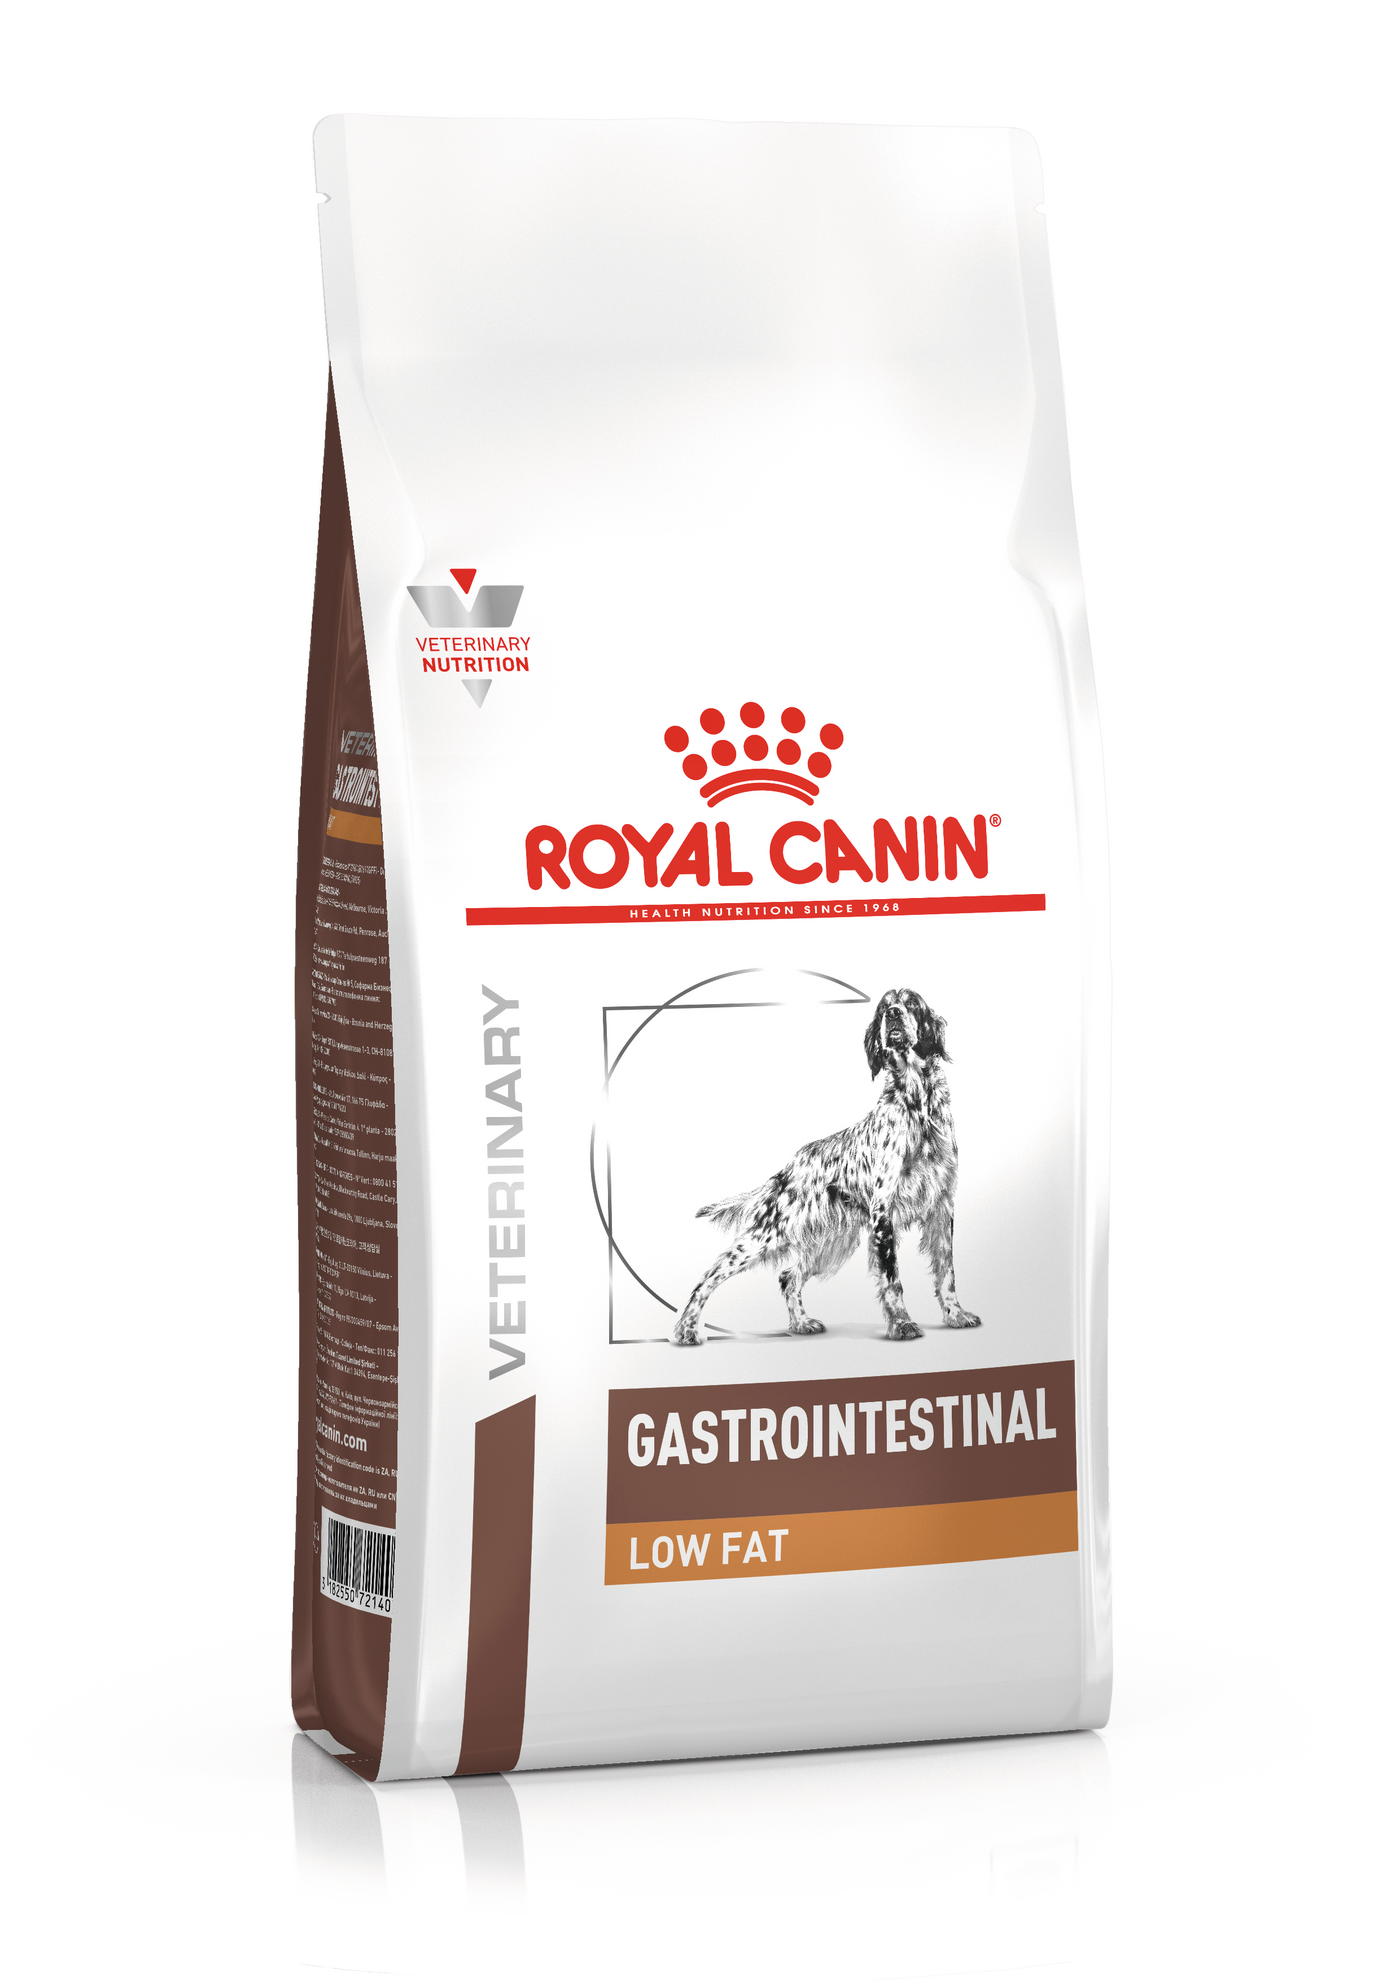 Gastrointestinal Low Fat